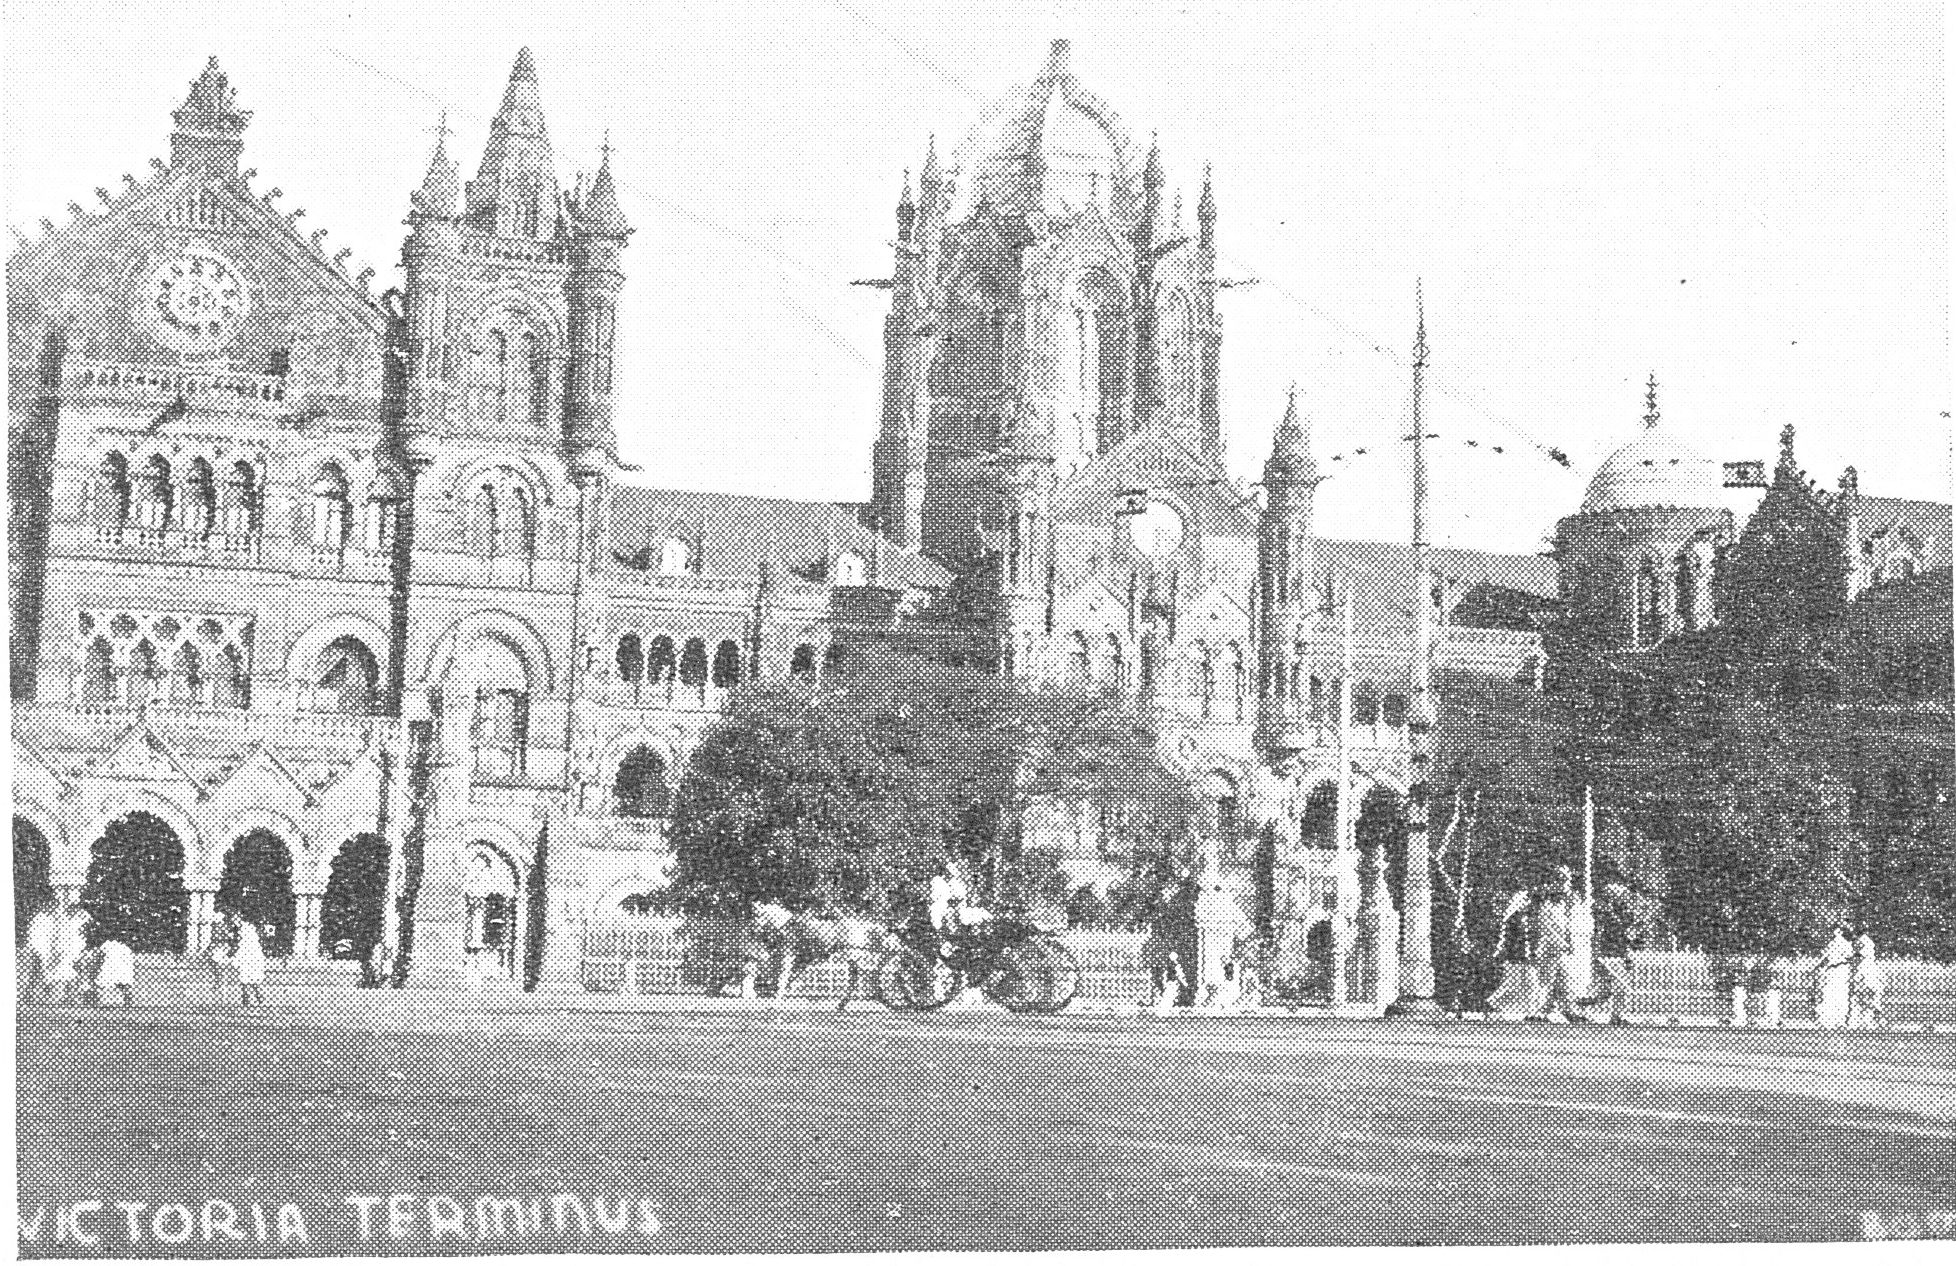 Victoria Terminus (now Chhatrapati Shivaji Maharaj Terminus), Bombay, India, 1944